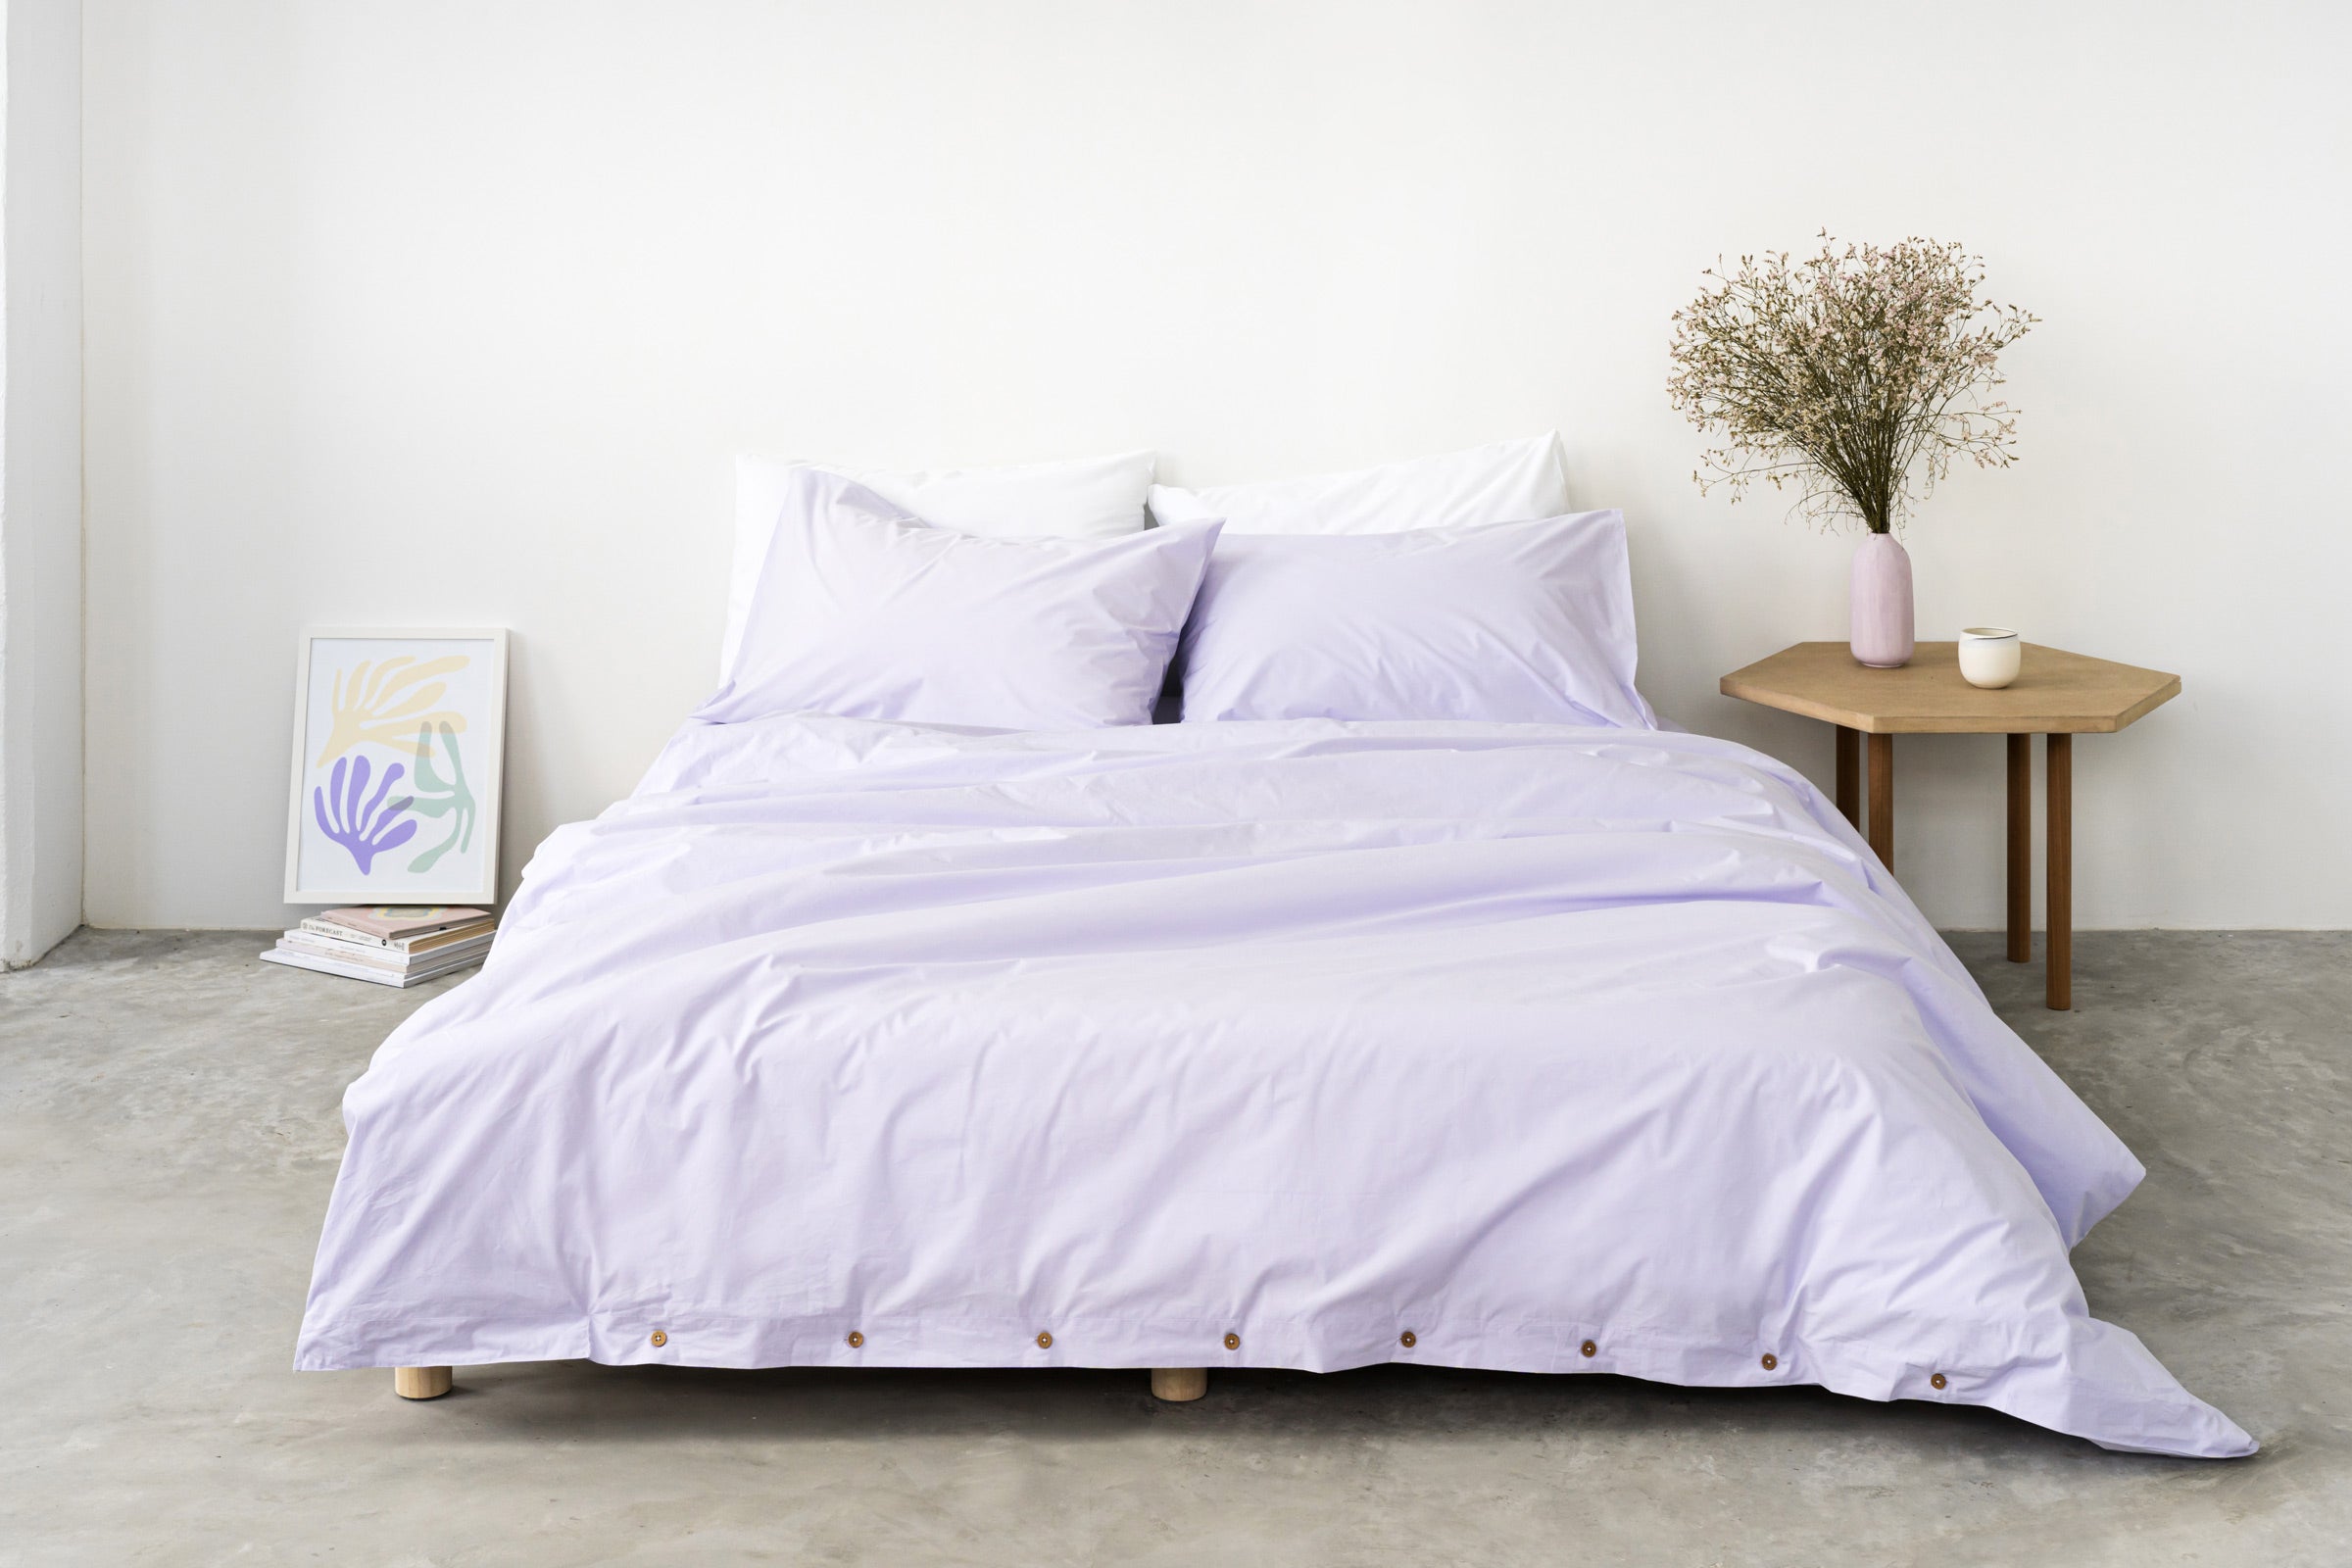 classic-lilac-duvet-cover-fitted-sheet-pillowcase-pair-white-pillowcase-pair-by-sojao.jpg